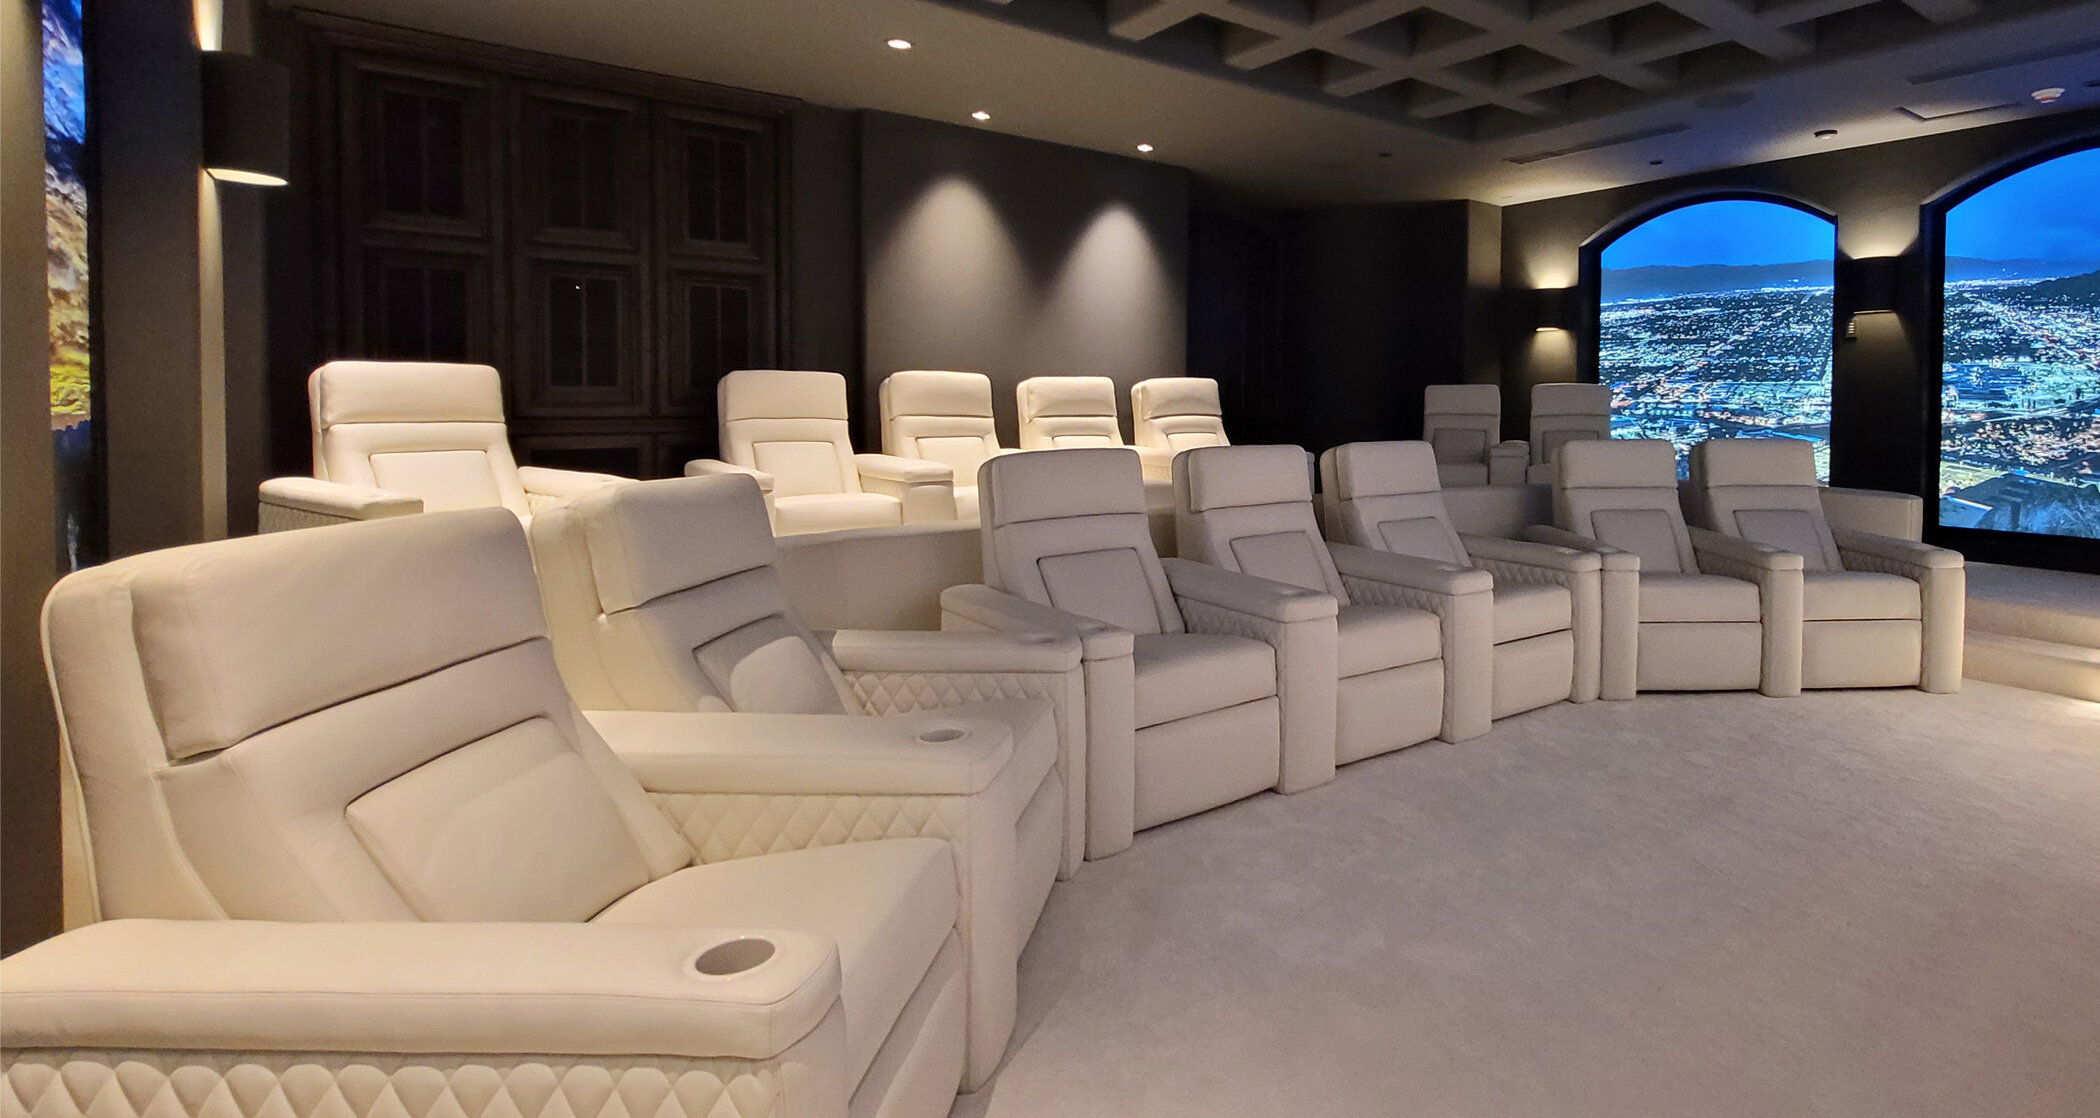 luxury homes theater